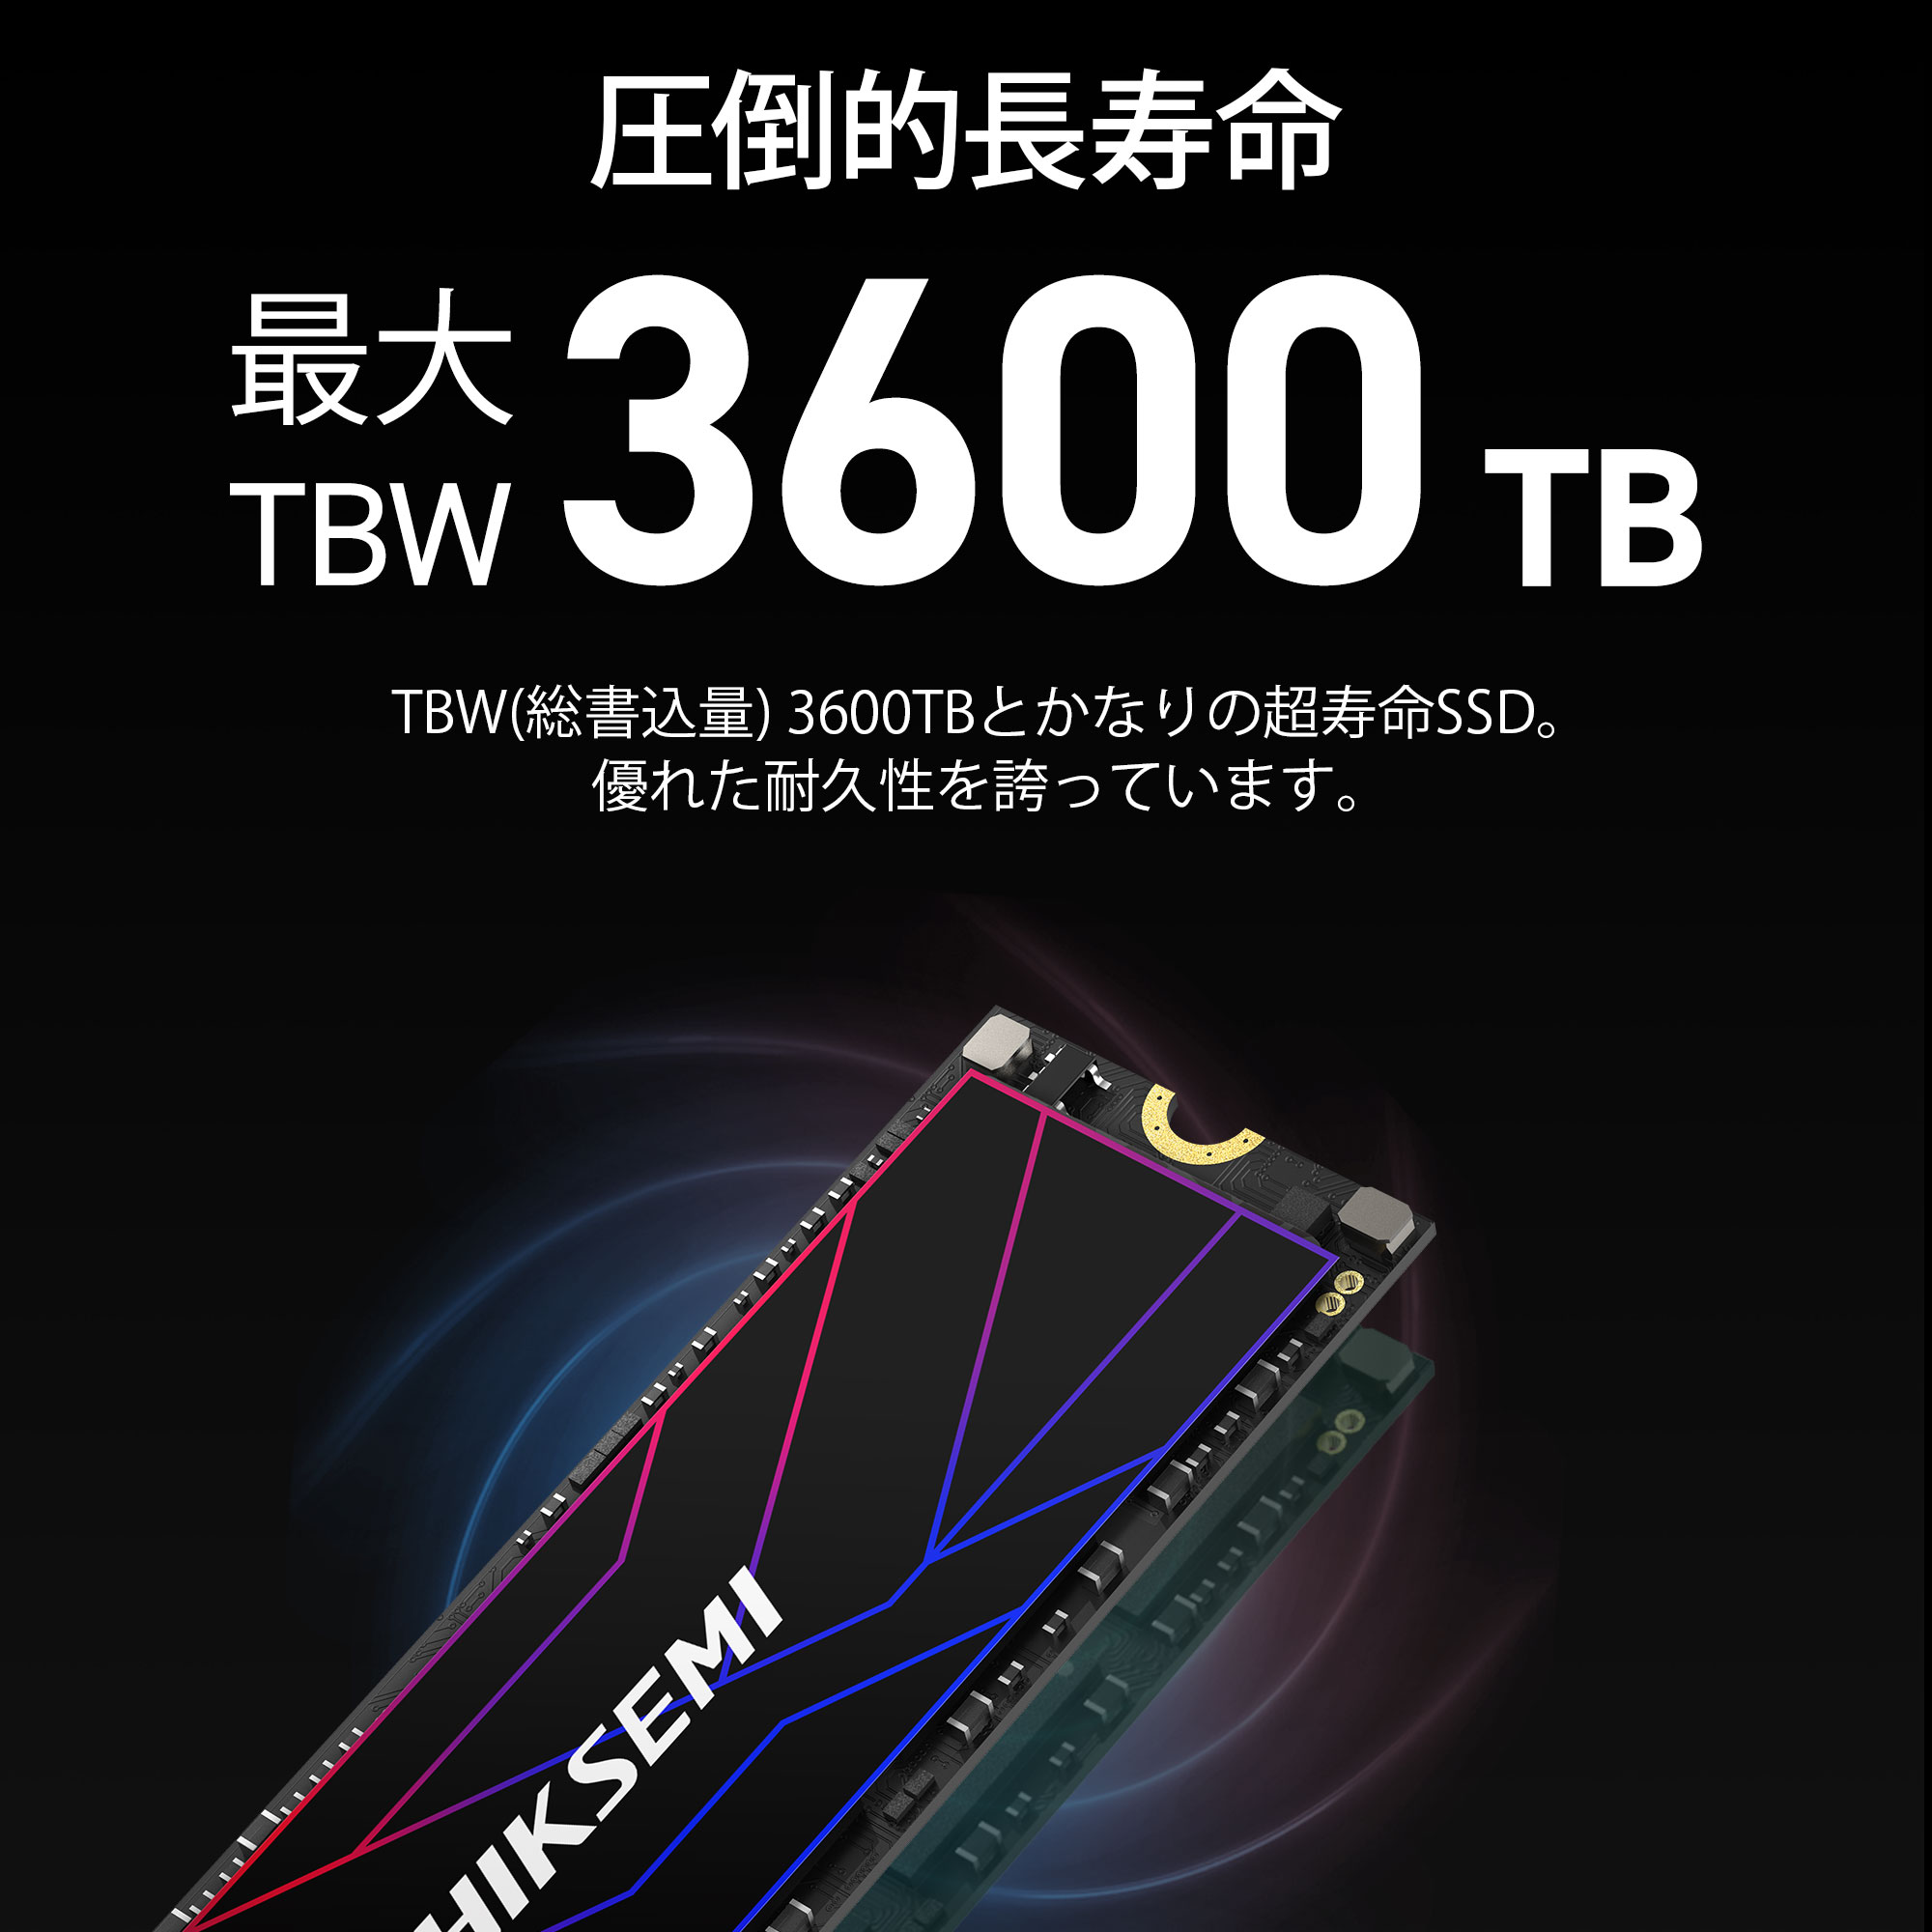 セール HIKSEMI 2TB NVMe SSD PCIe Gen 4×4 R:7,450MB/s W:6,750MB/s PS5確認済み  放熱シート付き M.2 Type 2280 内蔵 SSD 3D TLC 国内正規品 メーカー5年保証